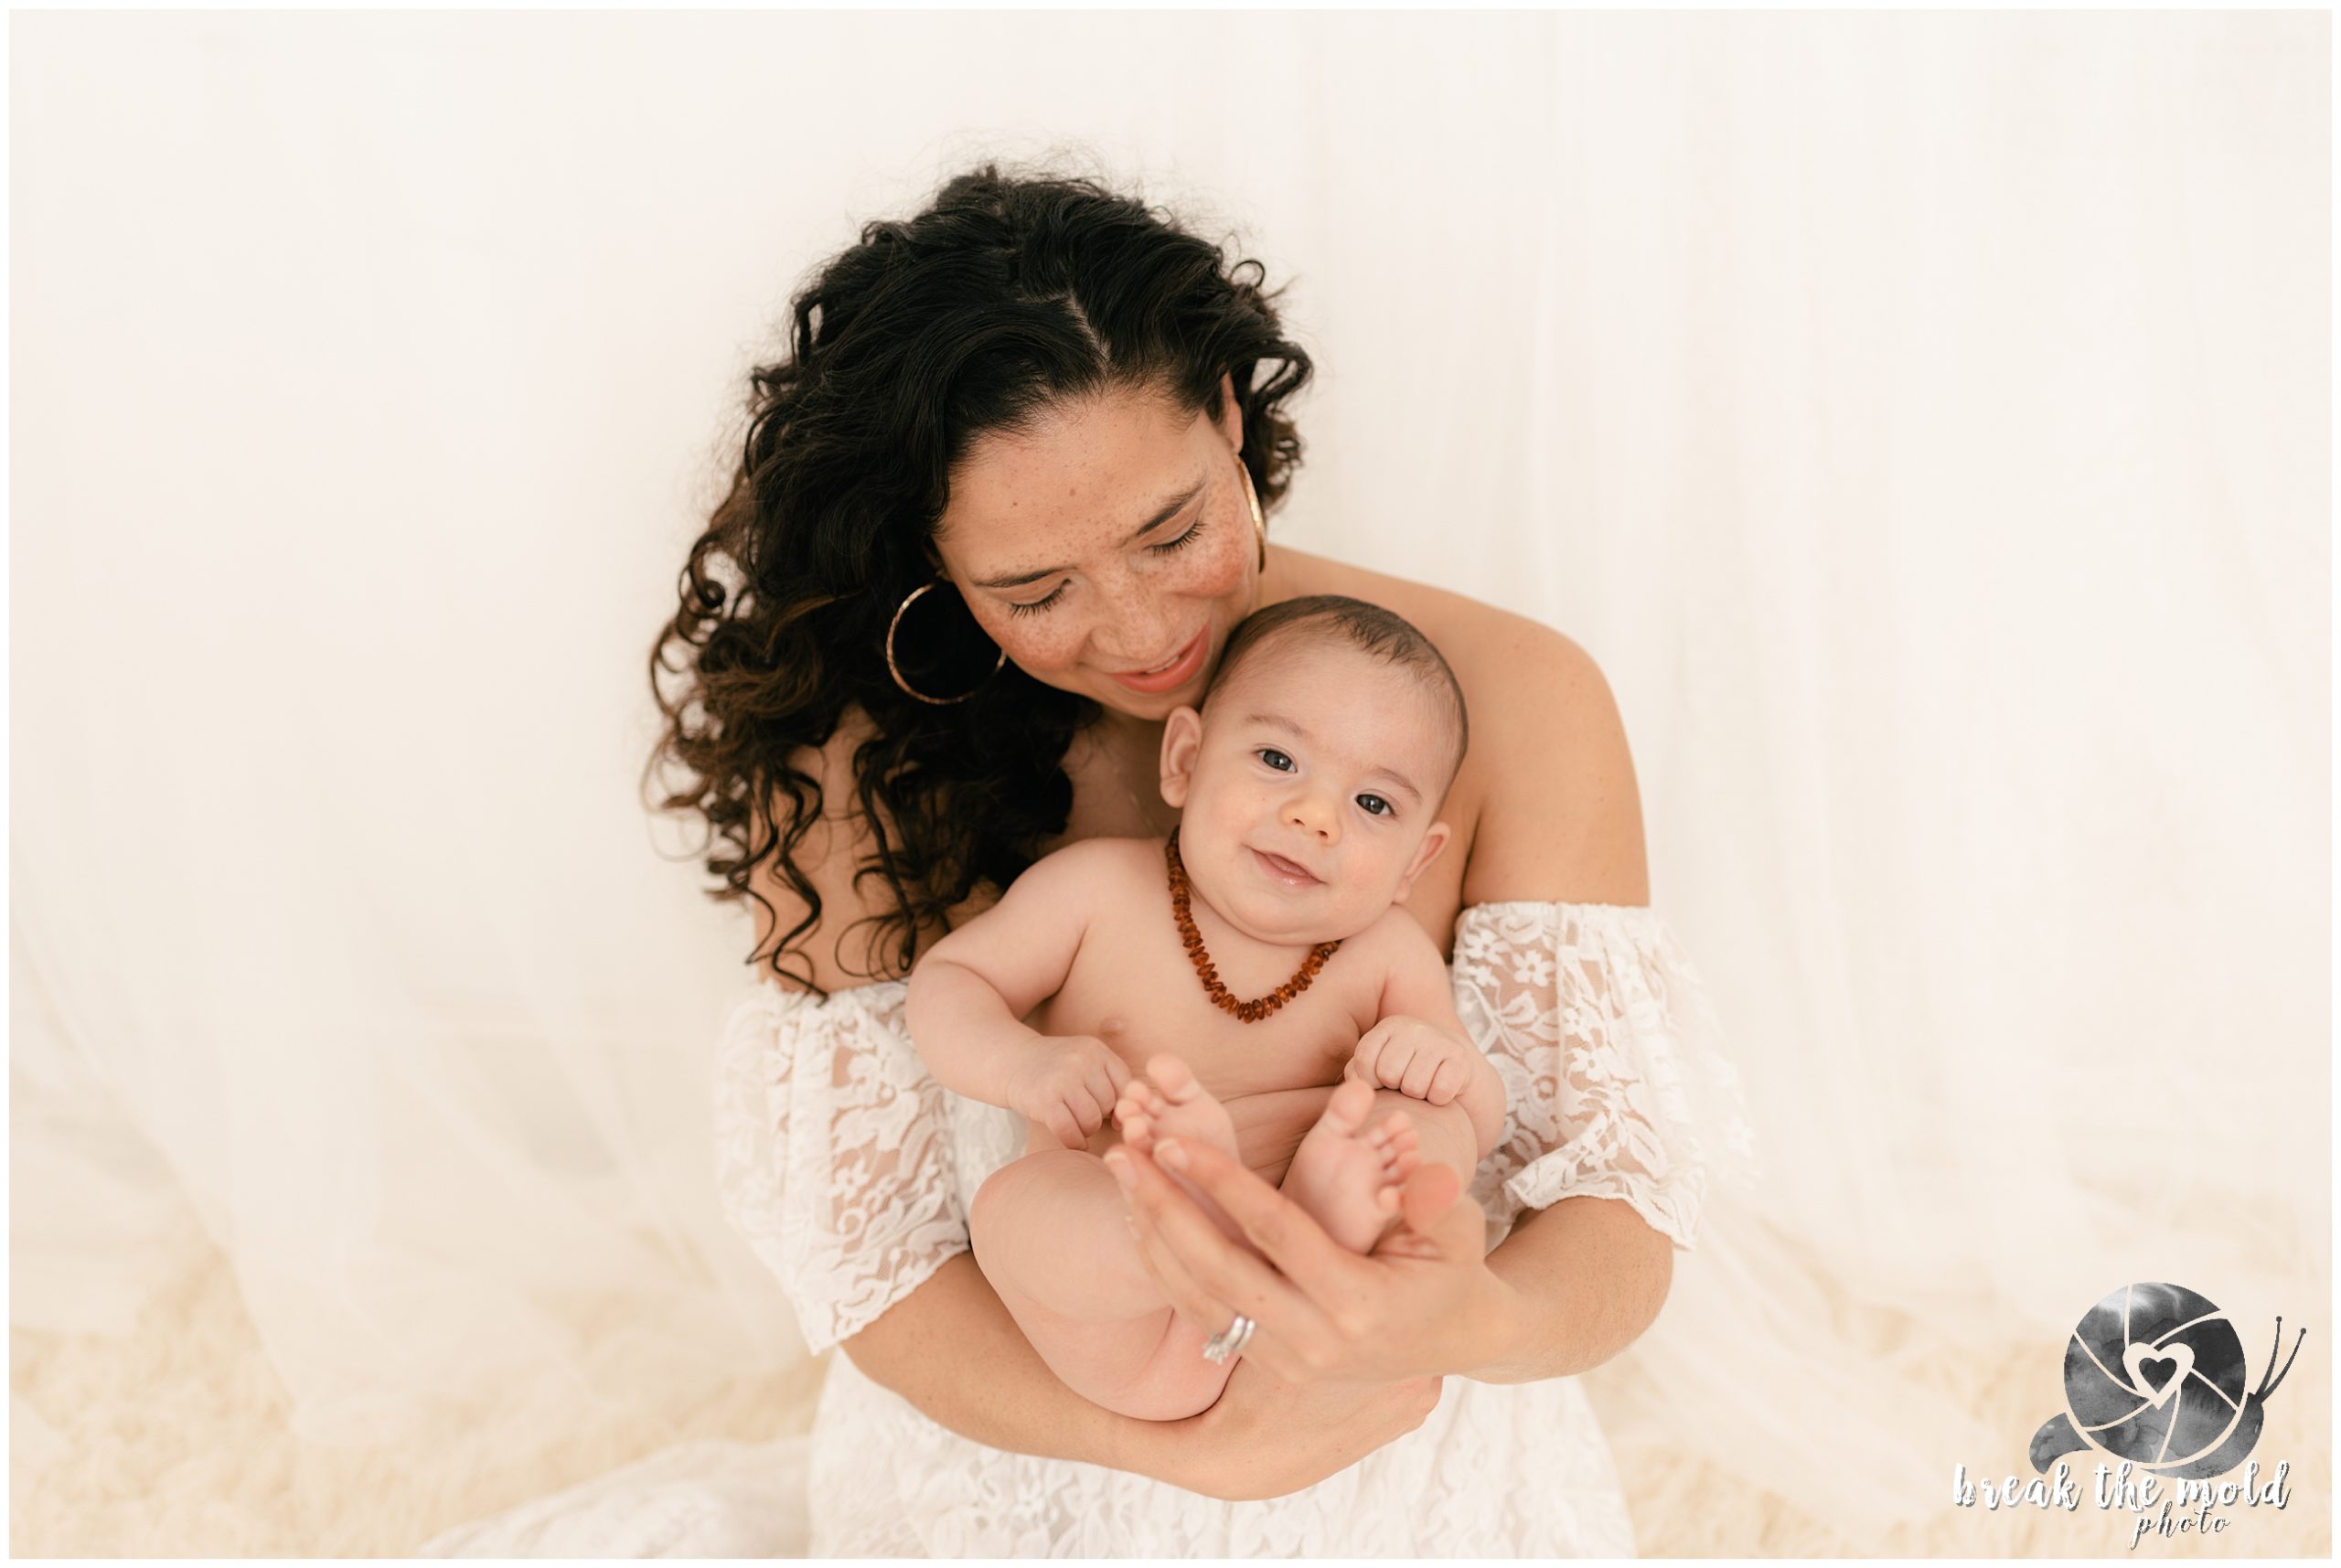 break-the-mold-photo-studio-knoxville-breastfeeding-photographer-mommy-baby-child-breastfed-portraits_0051.jpg